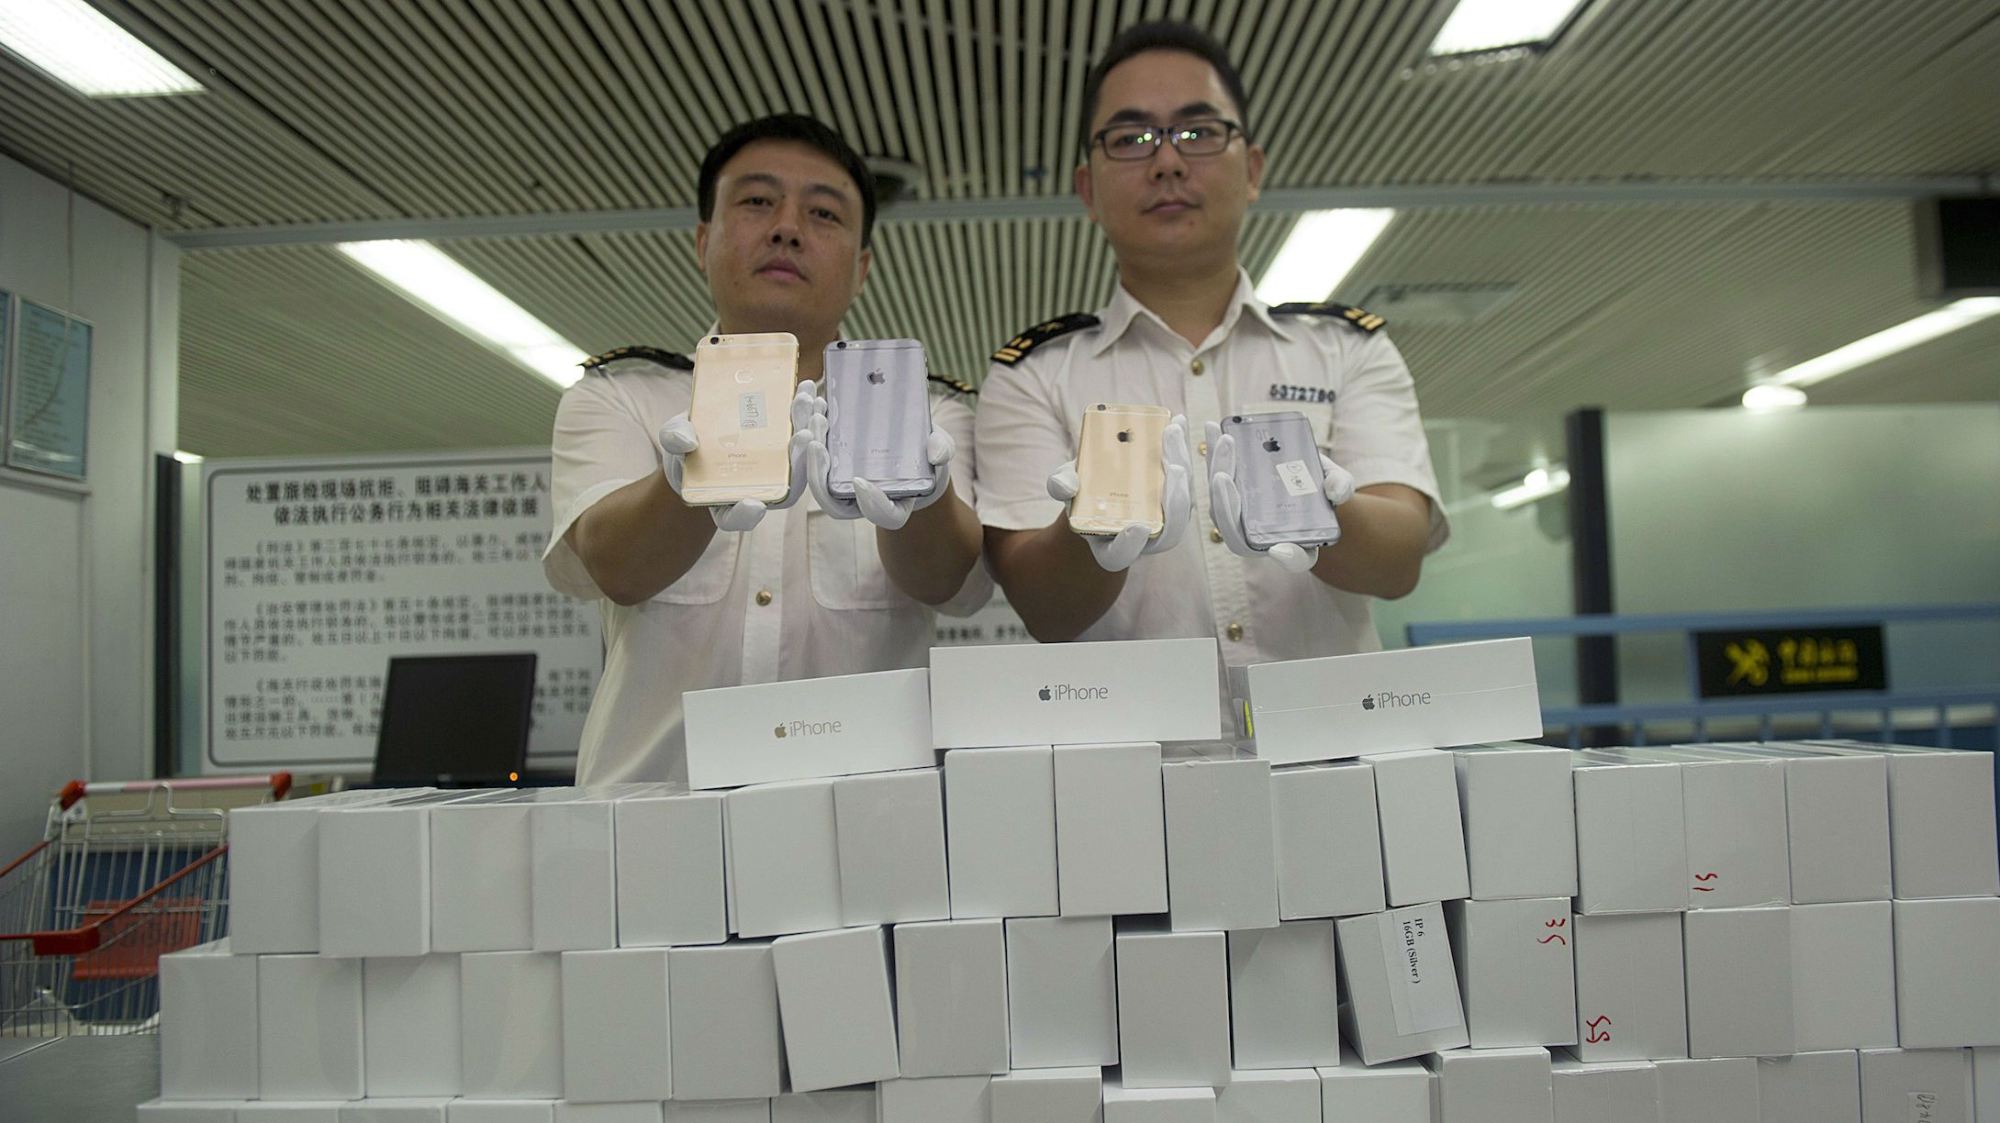 iphone-smuggling-hk-web-1